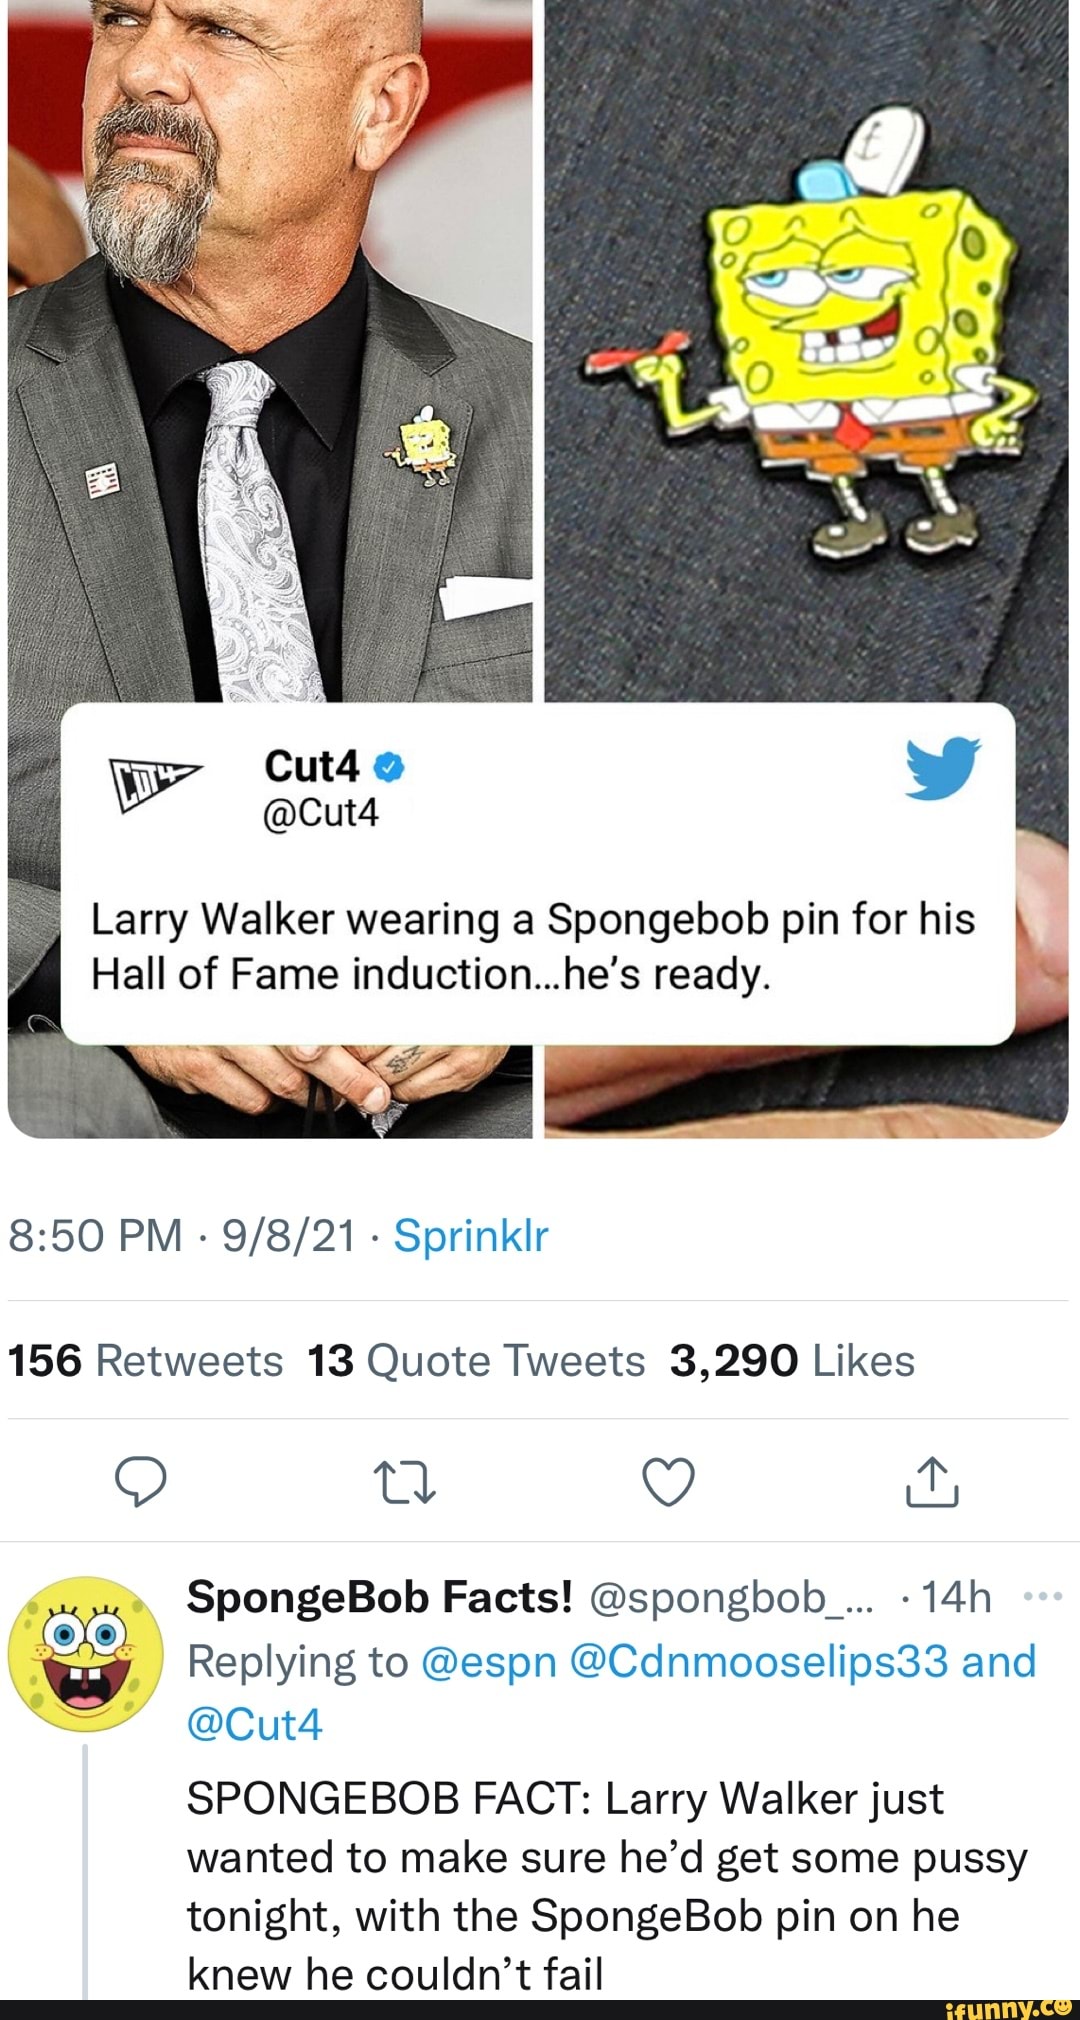 We Cut4 @Cut4 Larry Walker wearing a Spongebob pin for his I Hall